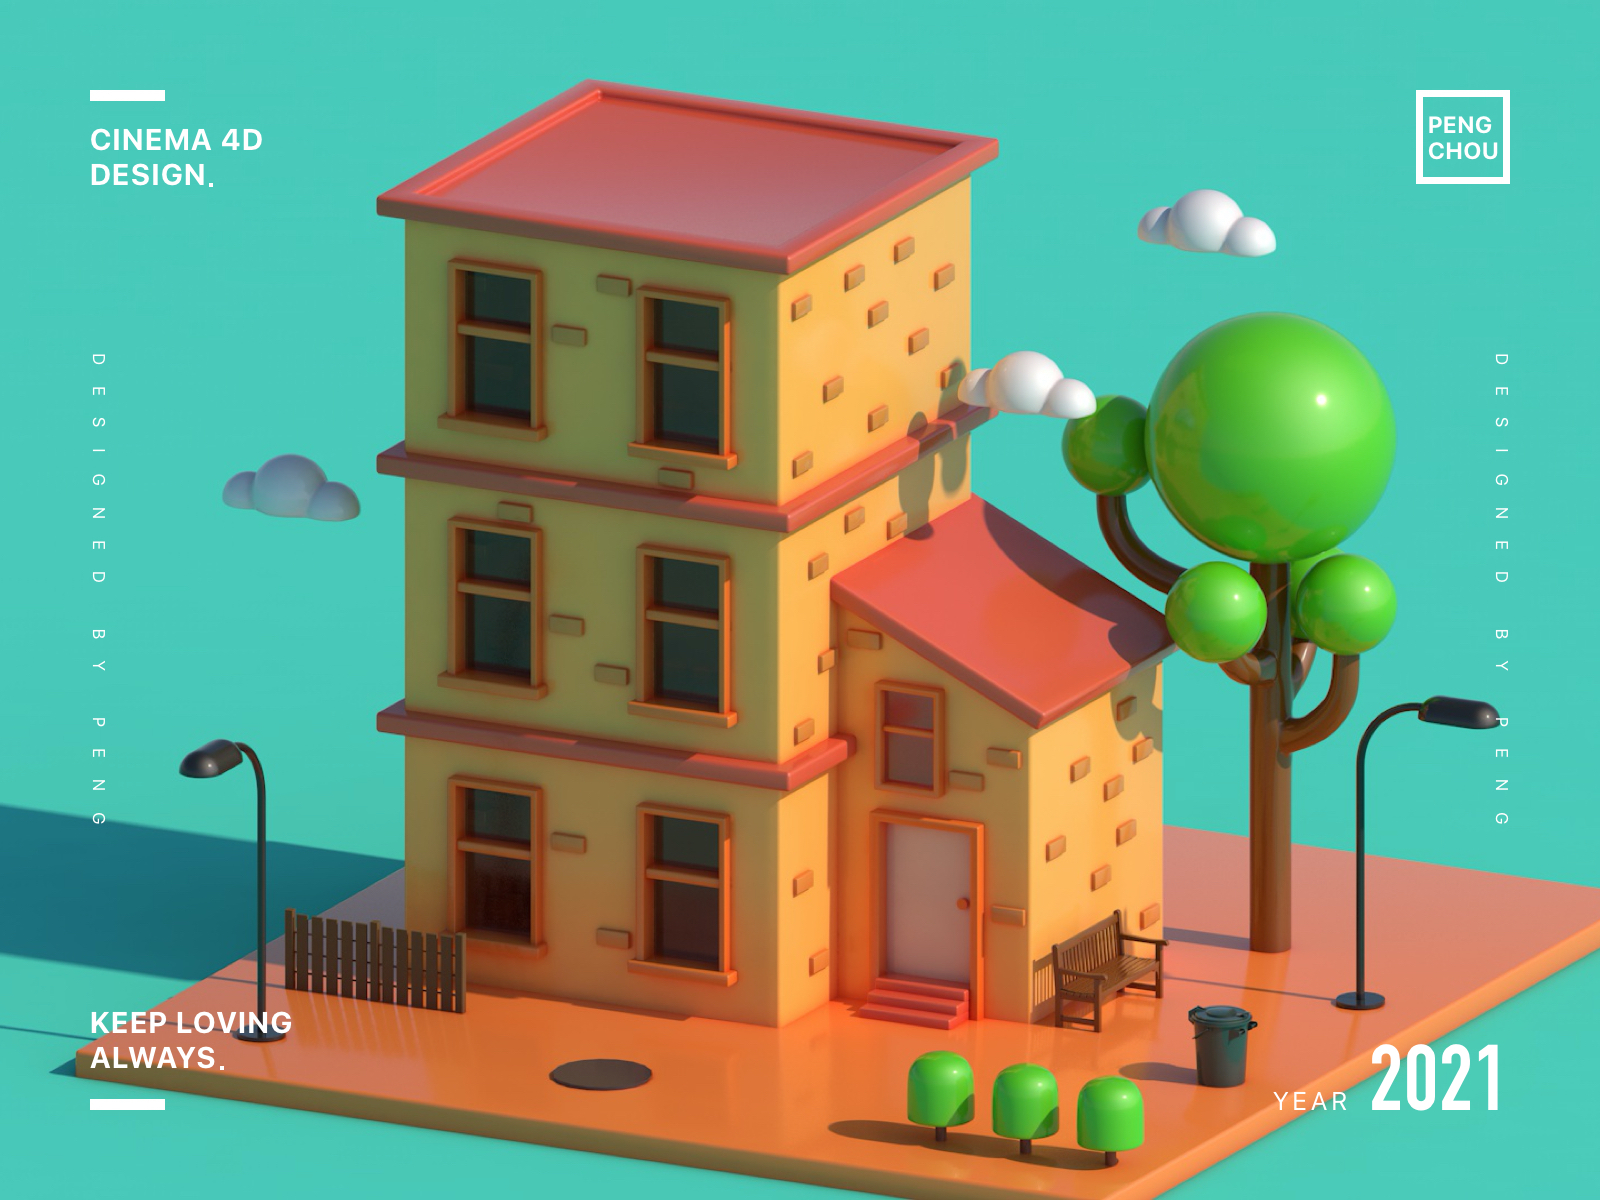 3D Cartoon House by Peng Chou on Dribbble